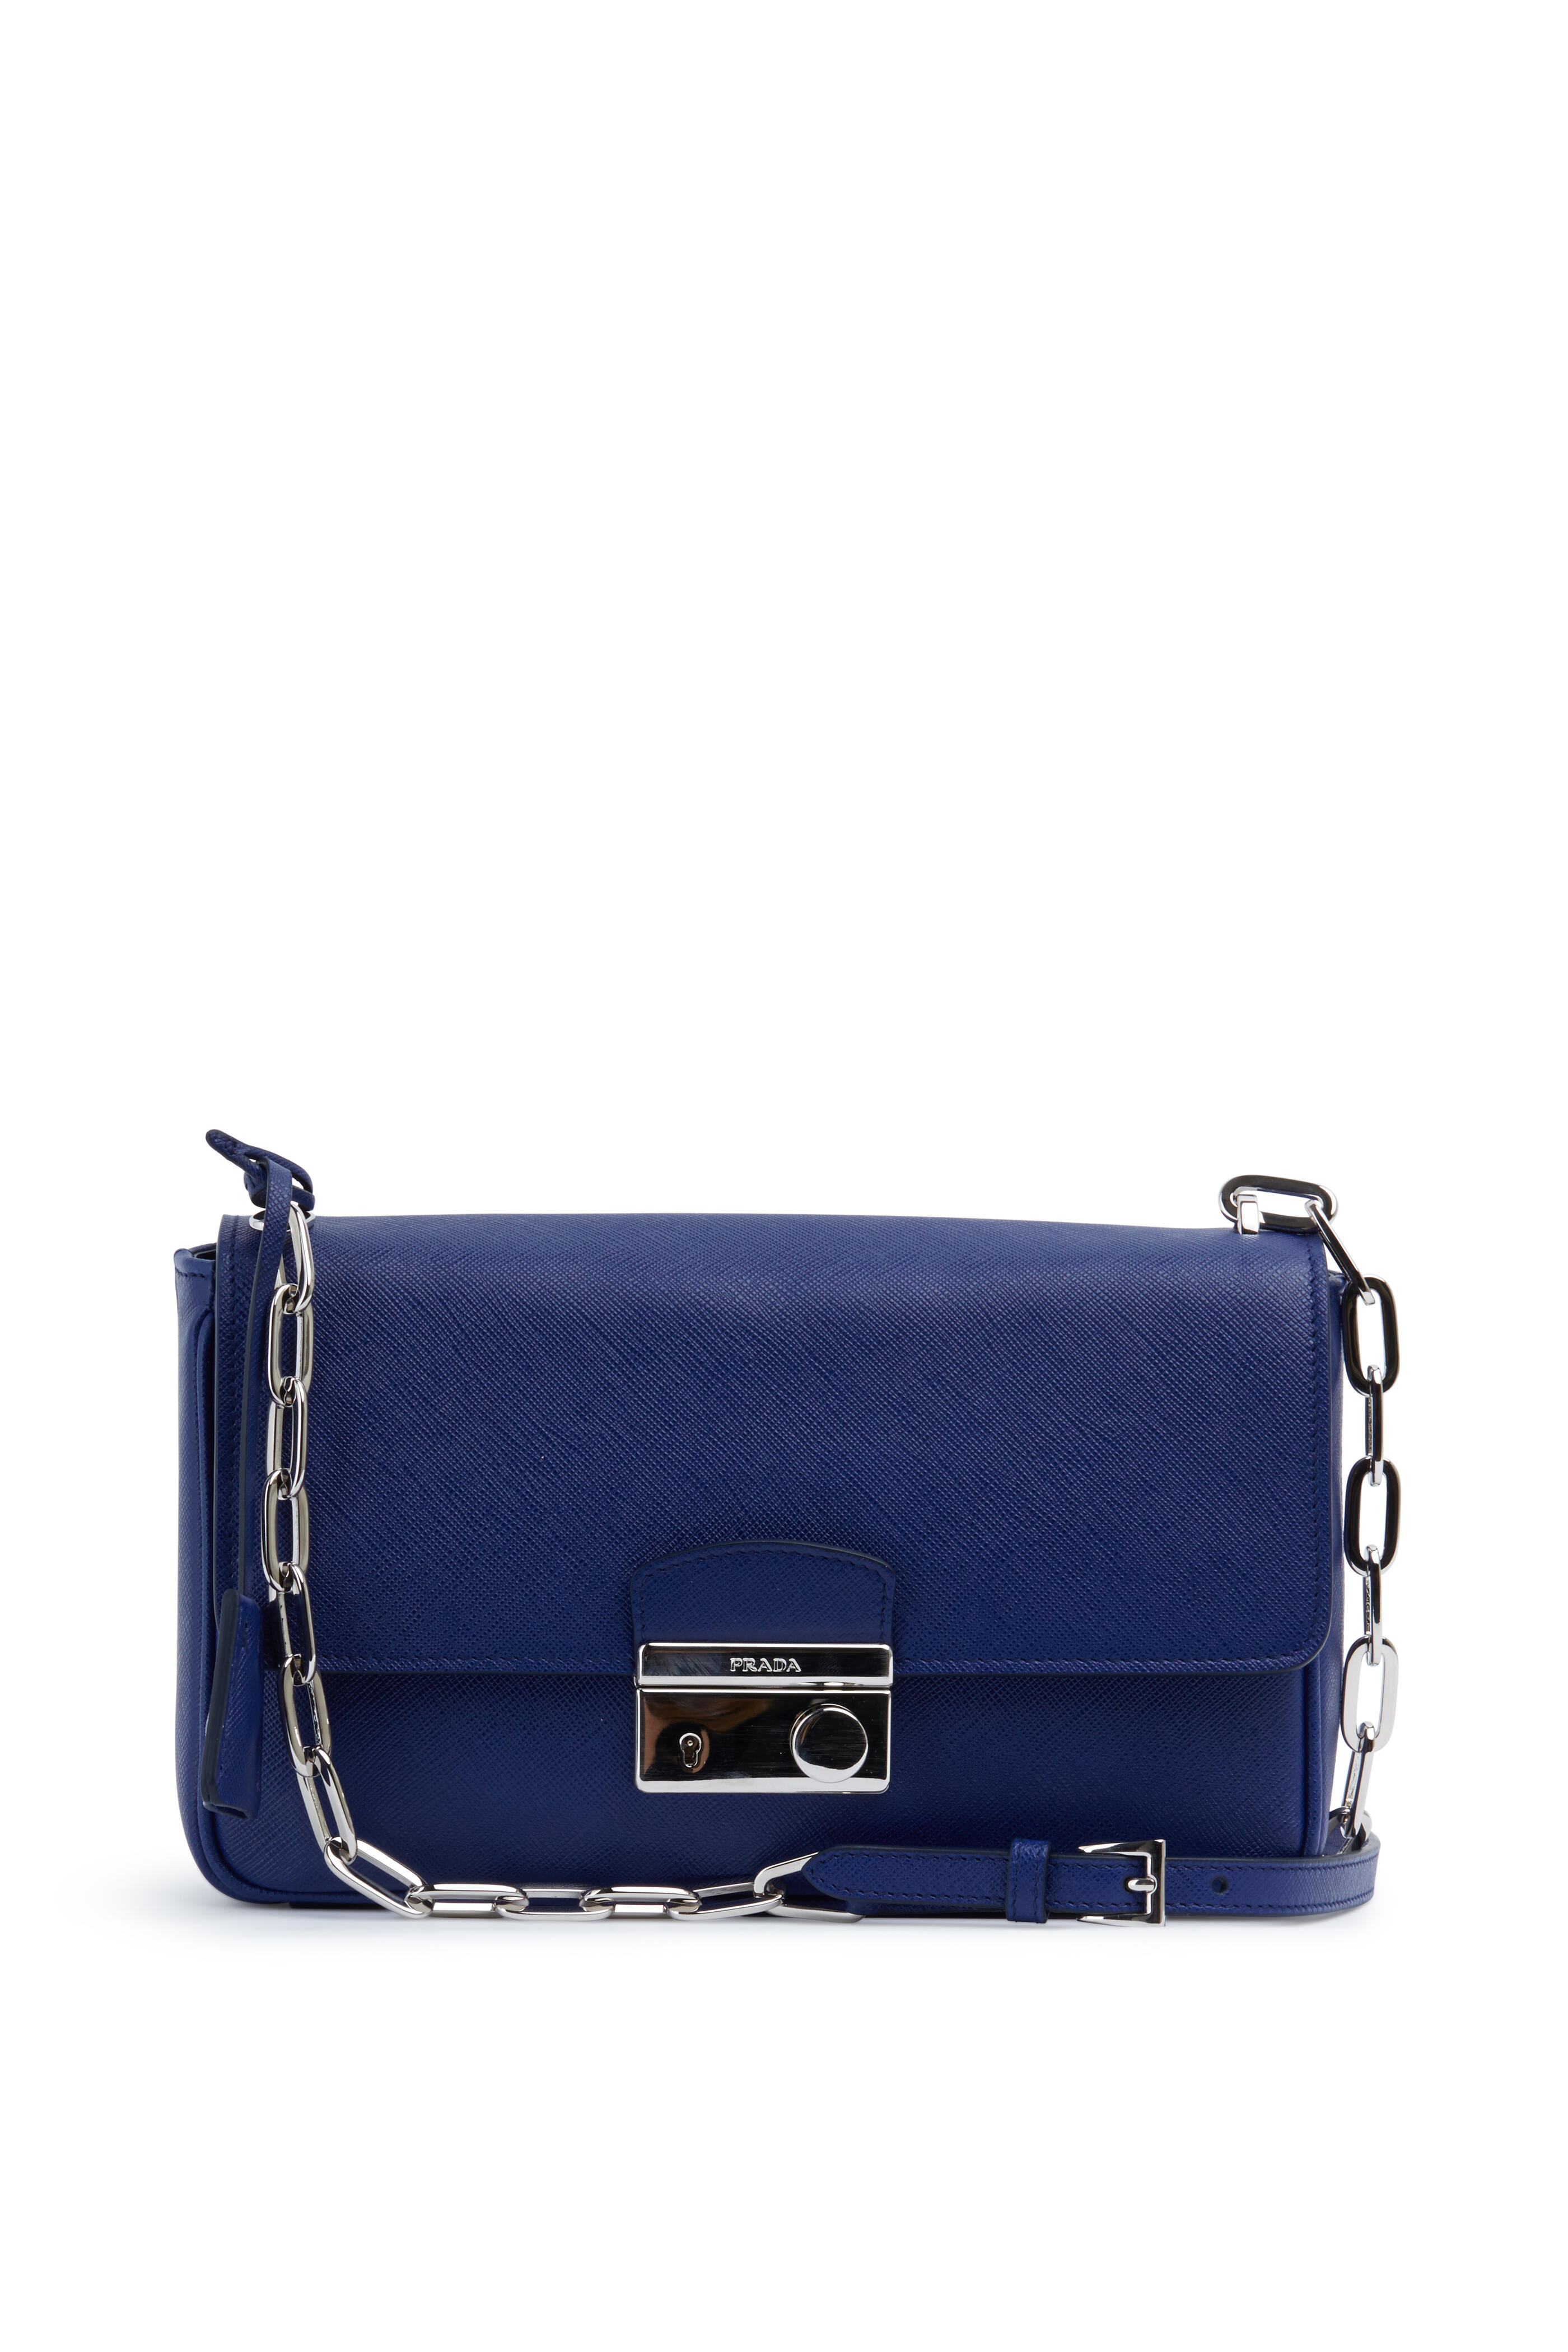 Prada Women's Cipria Saffiano Leather Mini Chain Shoulder Bag | by Mitchell Stores